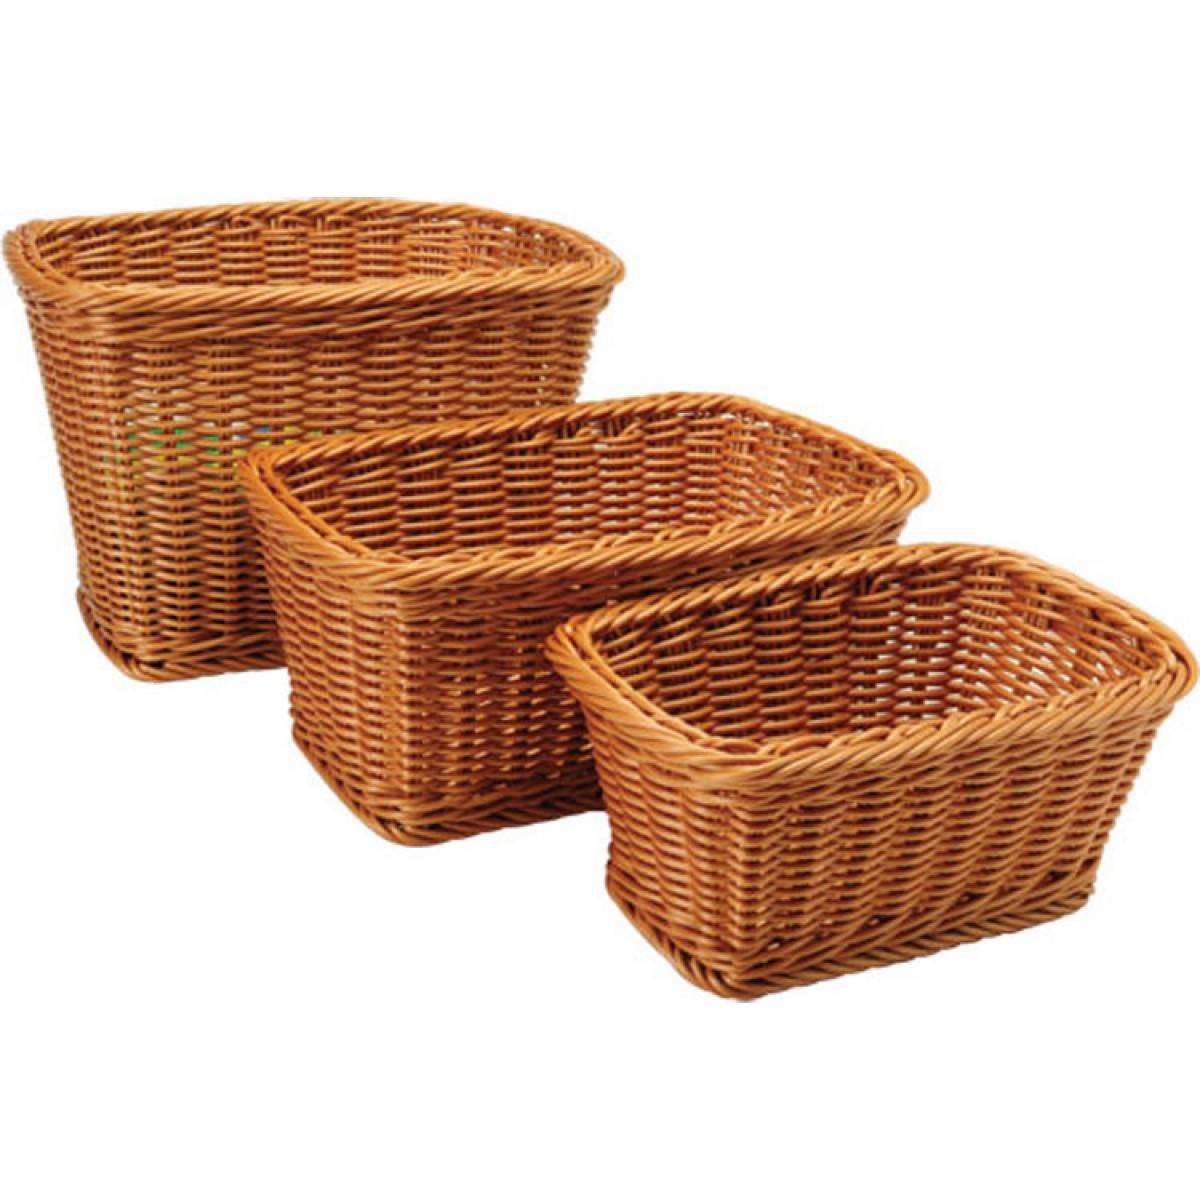 CRE8TIVE MINDS, MTC84, Rectangular Woven Plastic Baskets